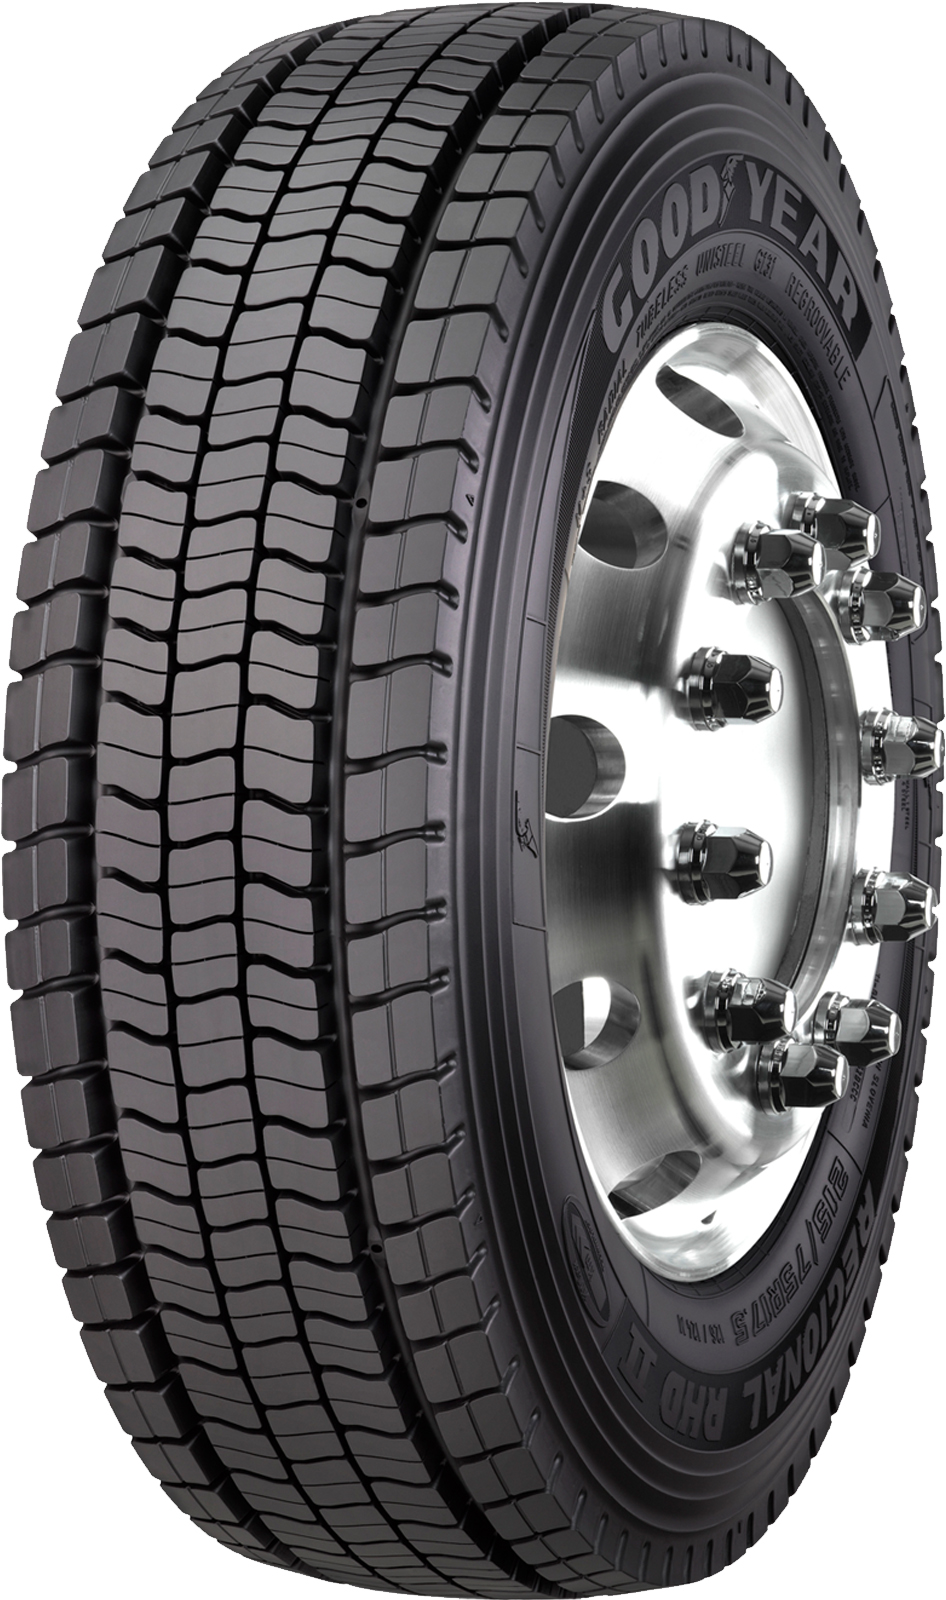 product_type-heavy_tires GOODYEAR REG. RHD II TL 285/70 R19.5 L